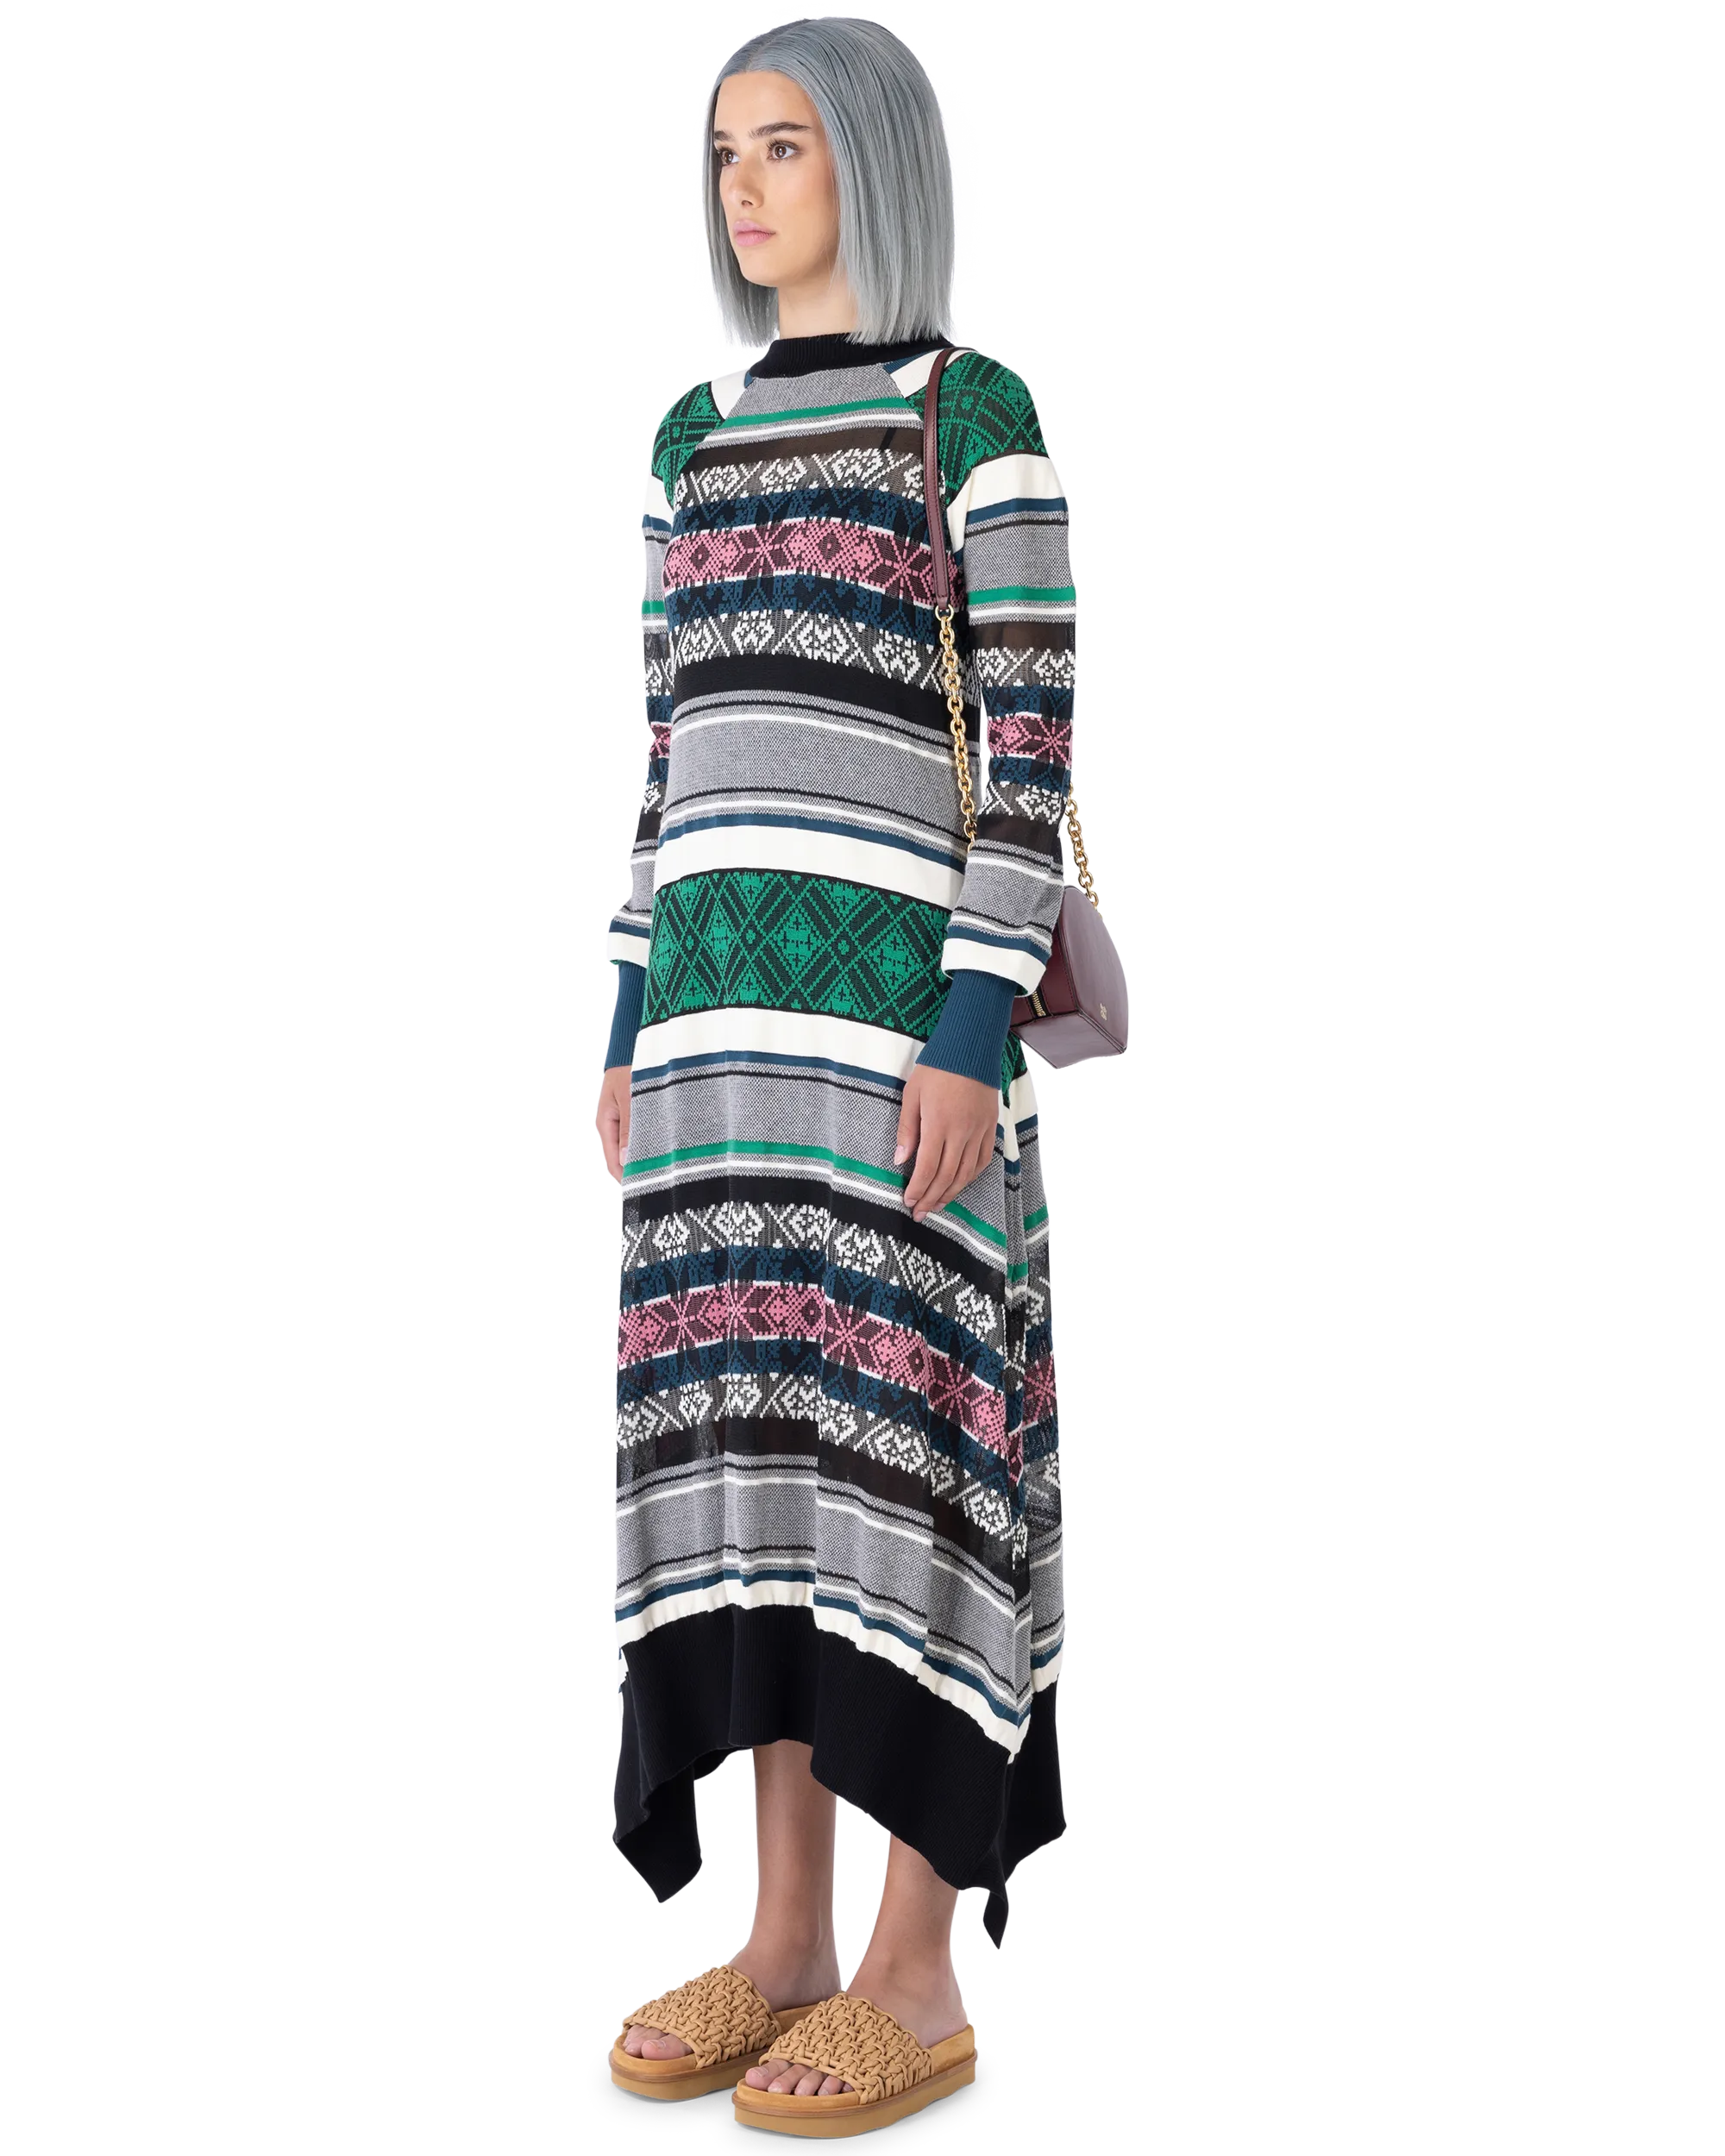 Jacquard Knit Sweater Dress